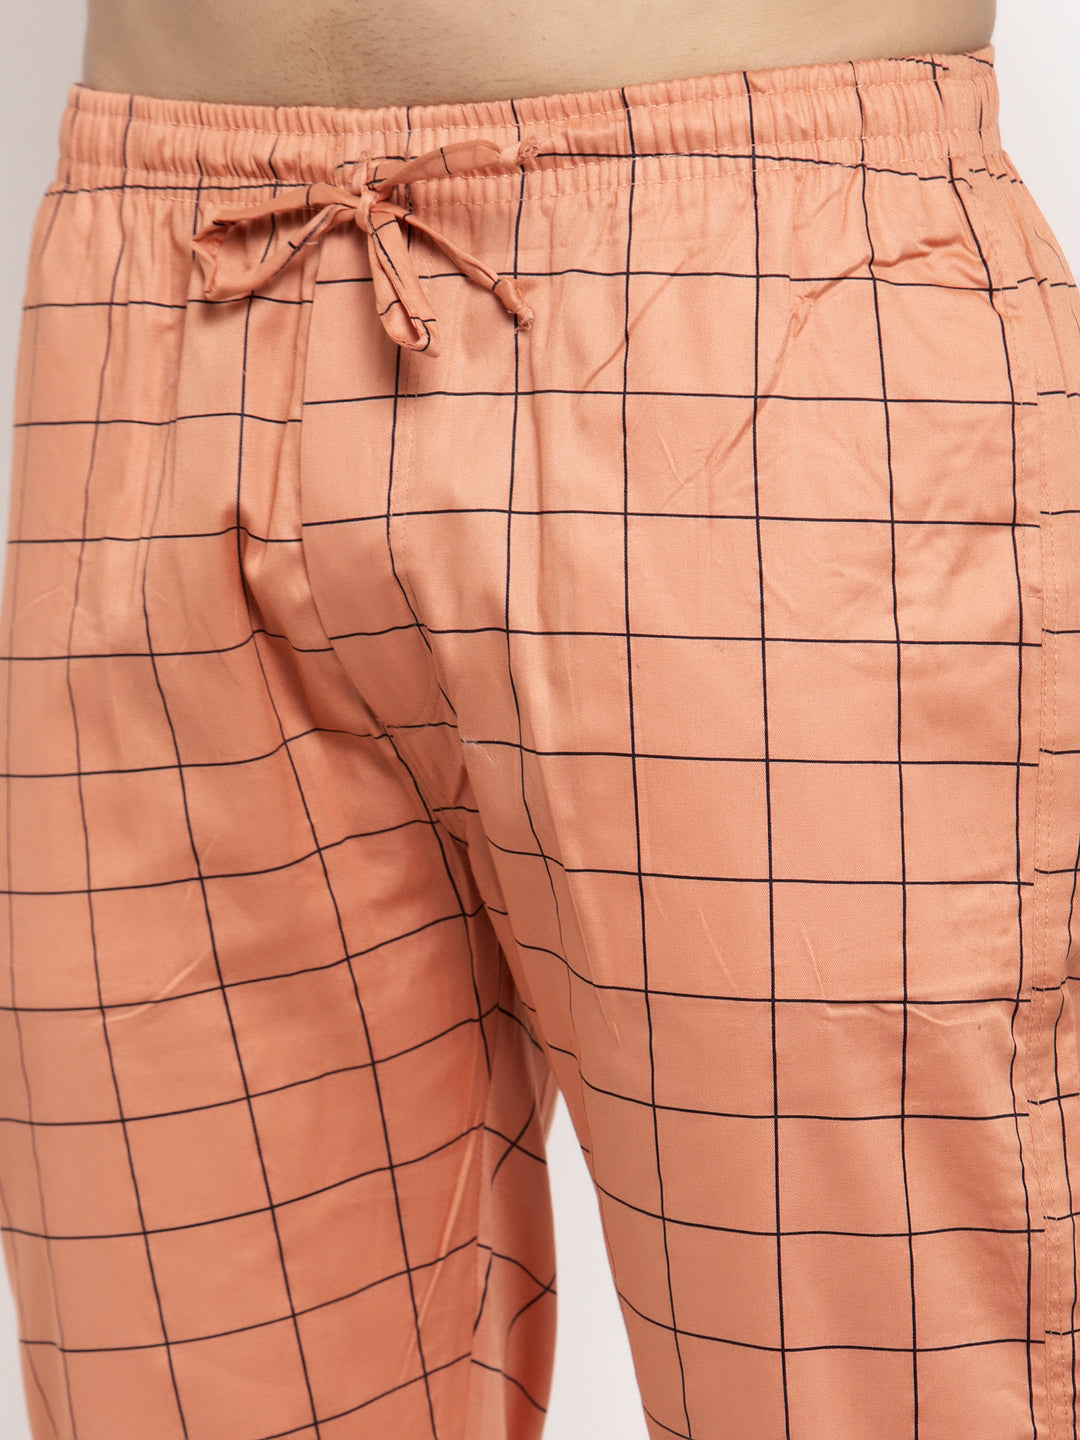 Men's Orange Checked Cotton Track Pants ( JOG 012Orange ) - Jainish